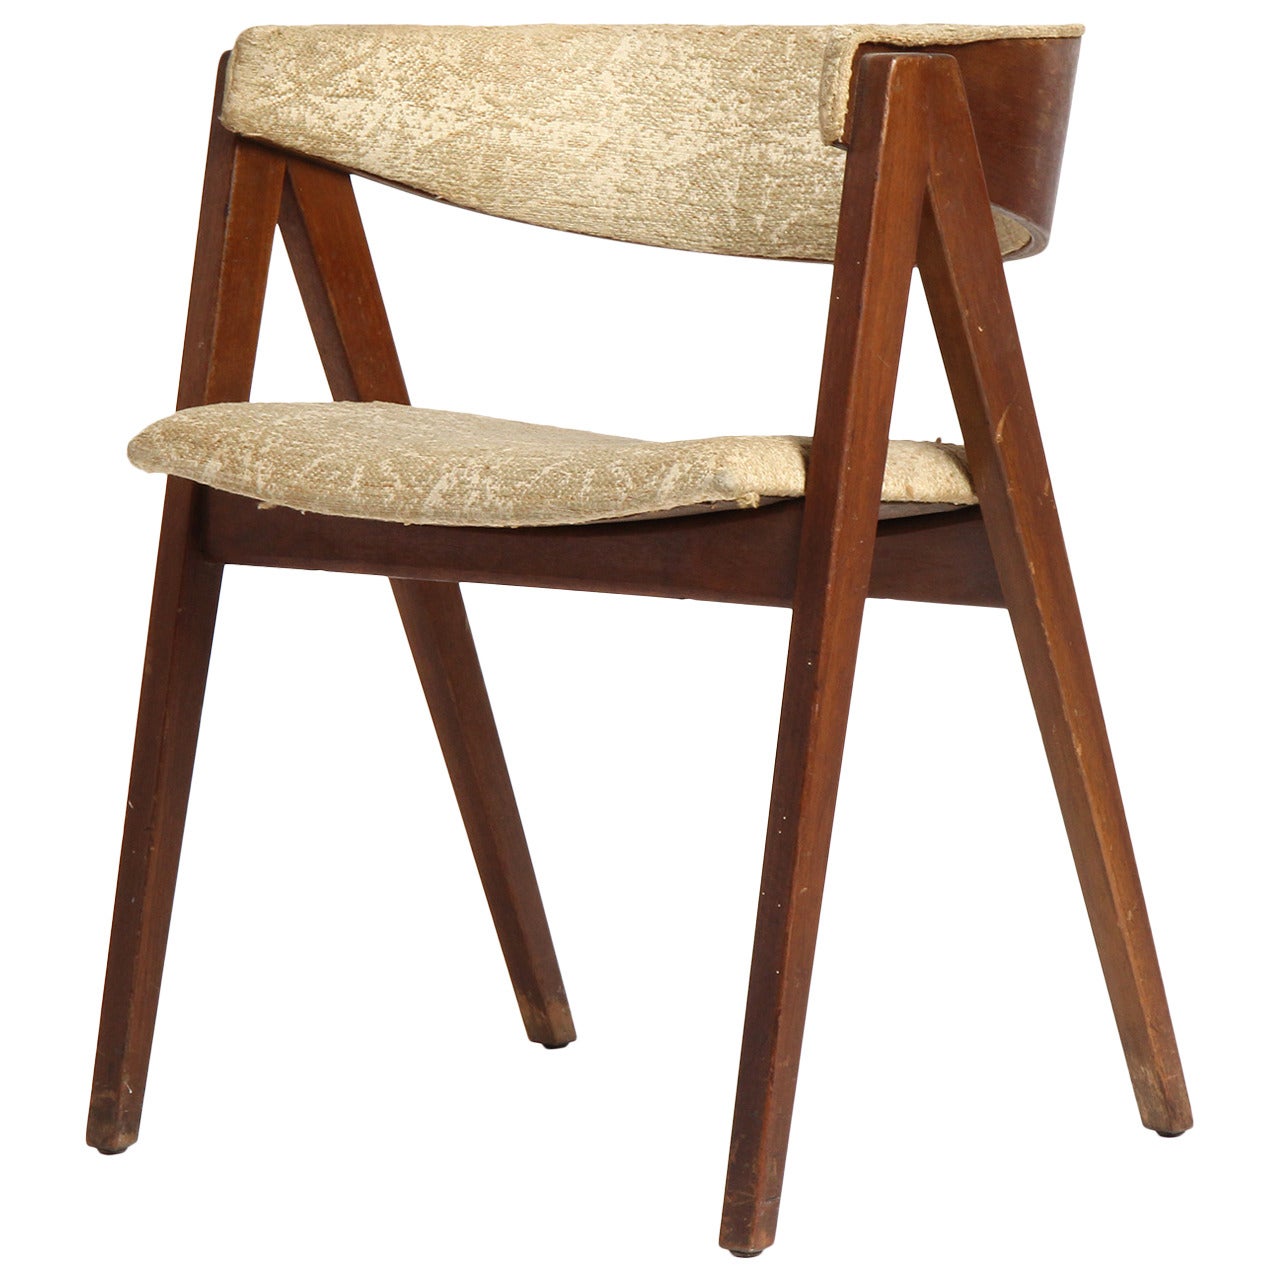 Chair by Allan Gould